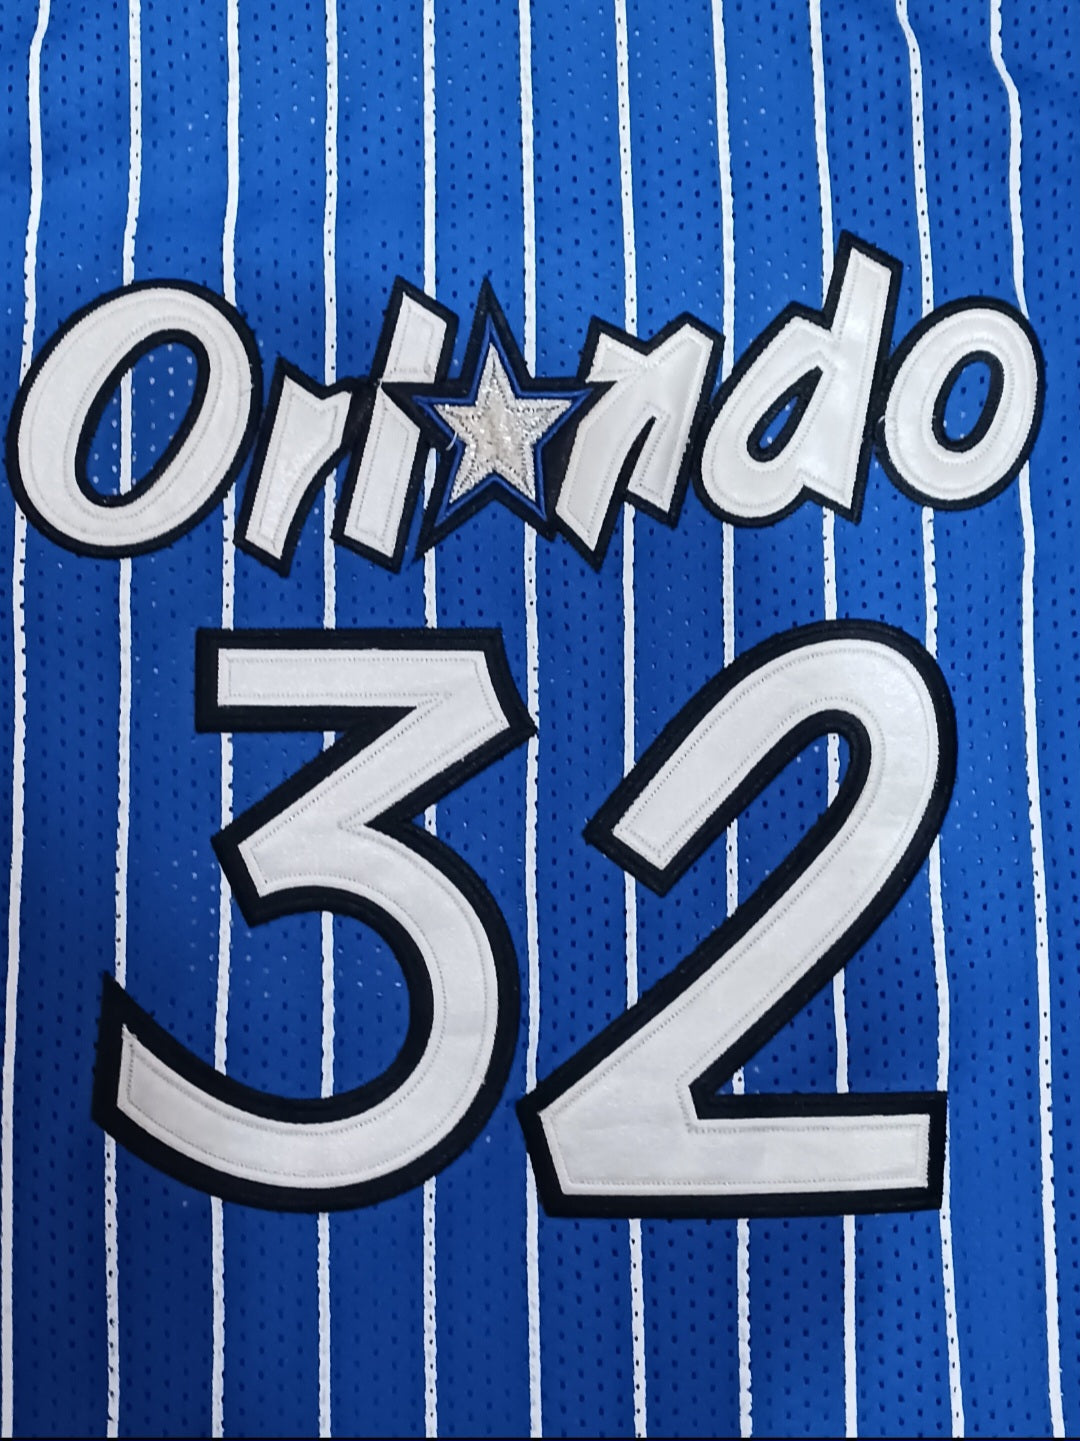 Shaquille O'neal Orlando Magic Jersey (Nike)